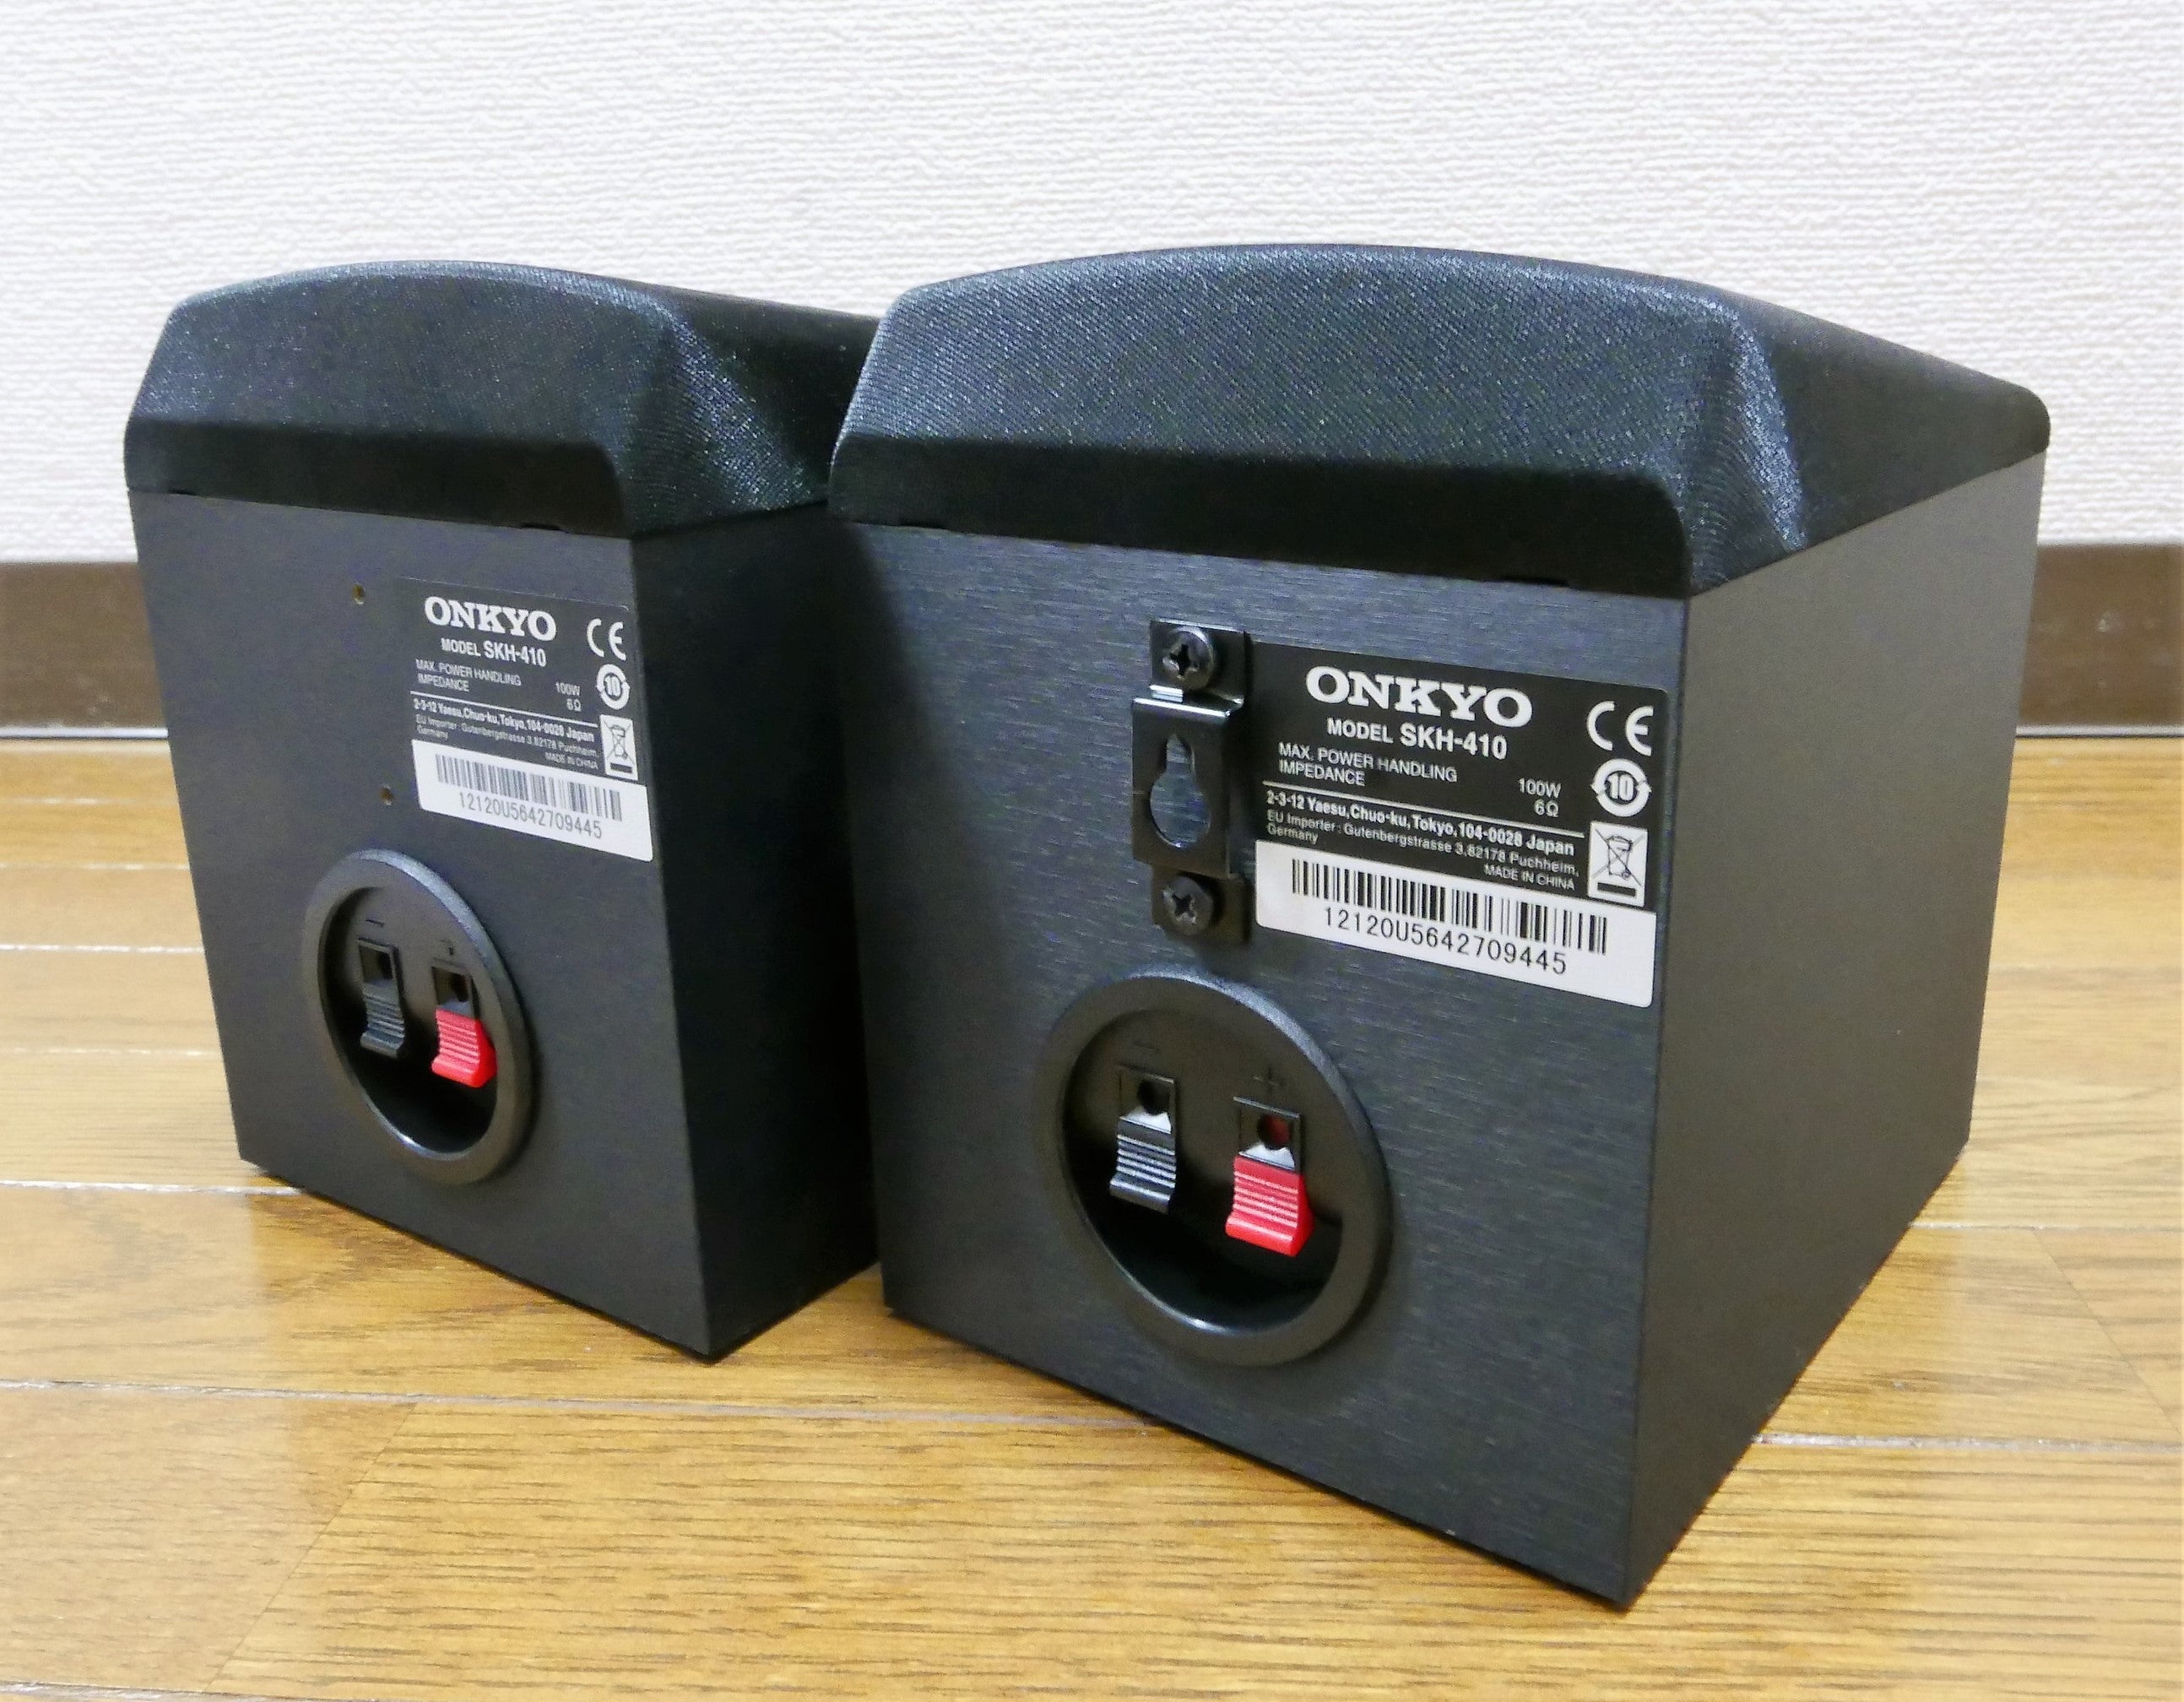 ONKYO - ONKYO Dolby Atmosイネーブルドスピーカー SKH-410の+